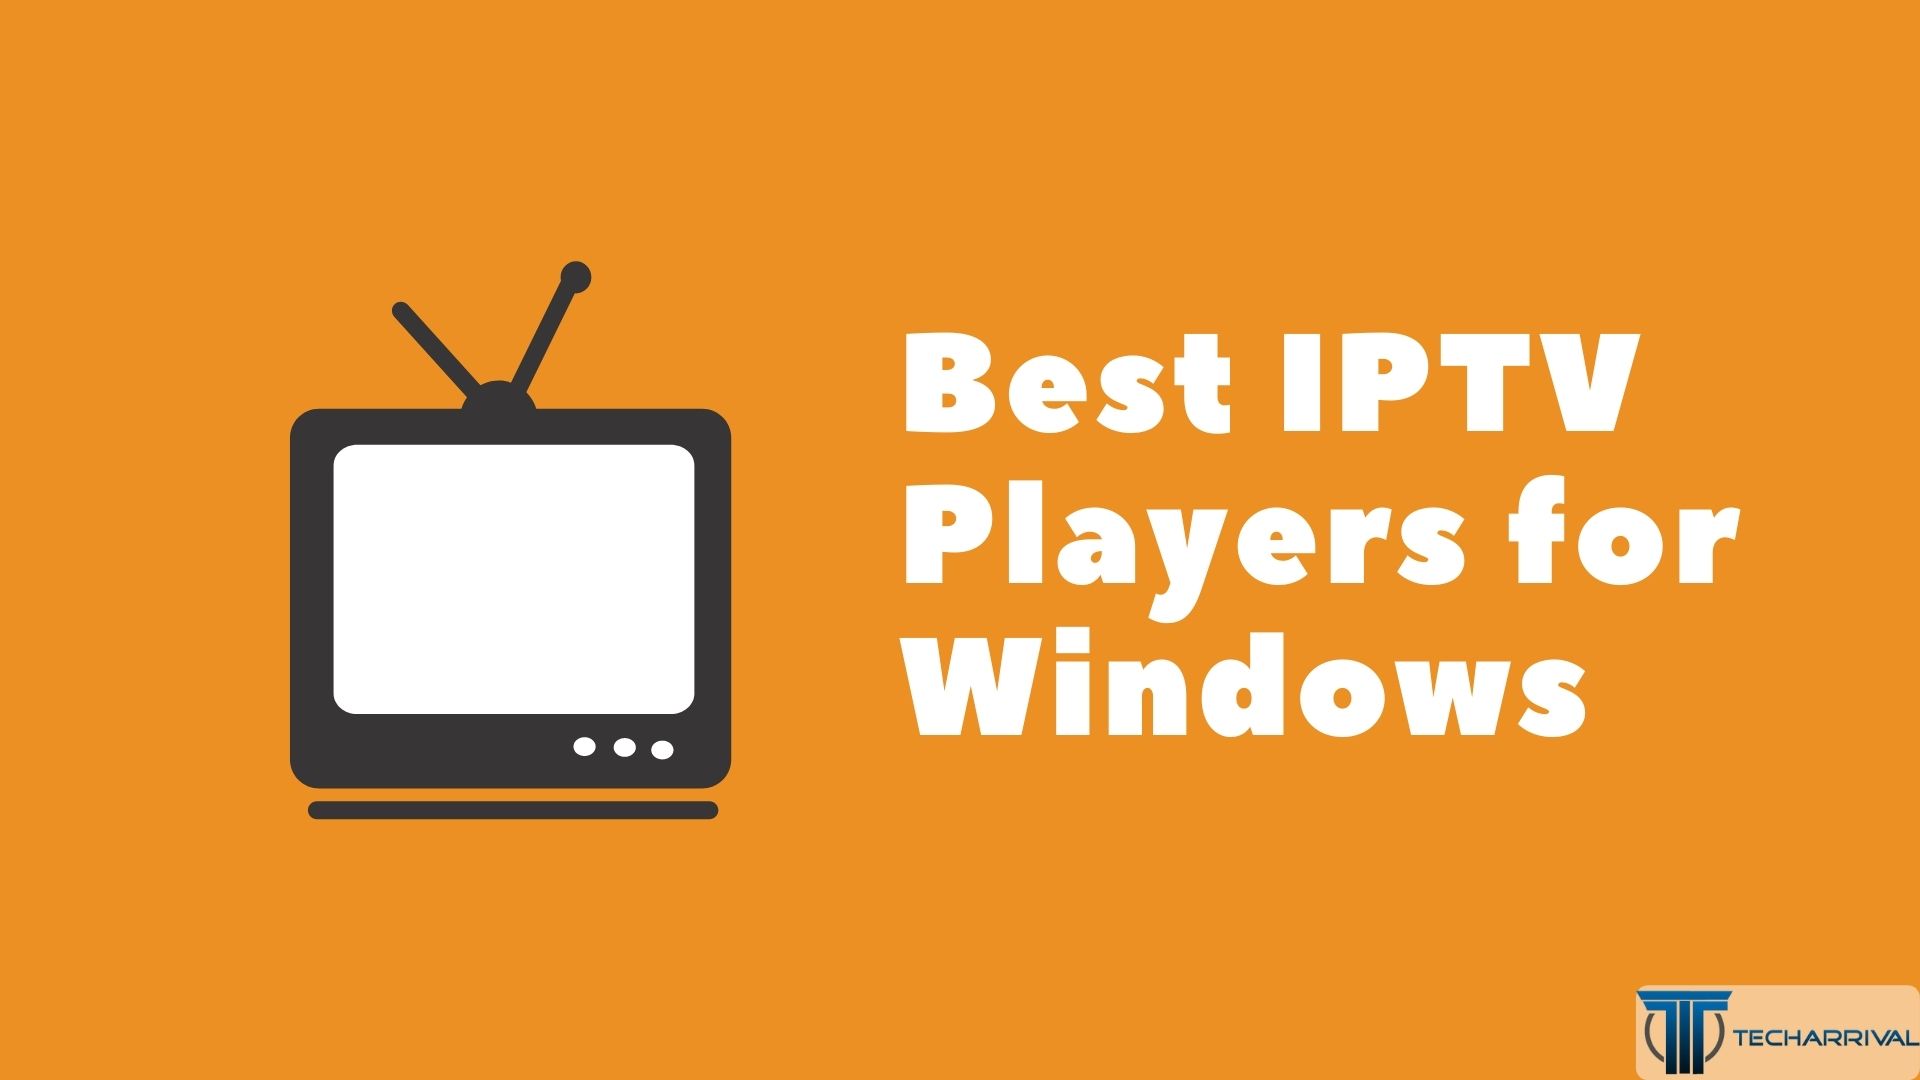 best iptv player for windows pc